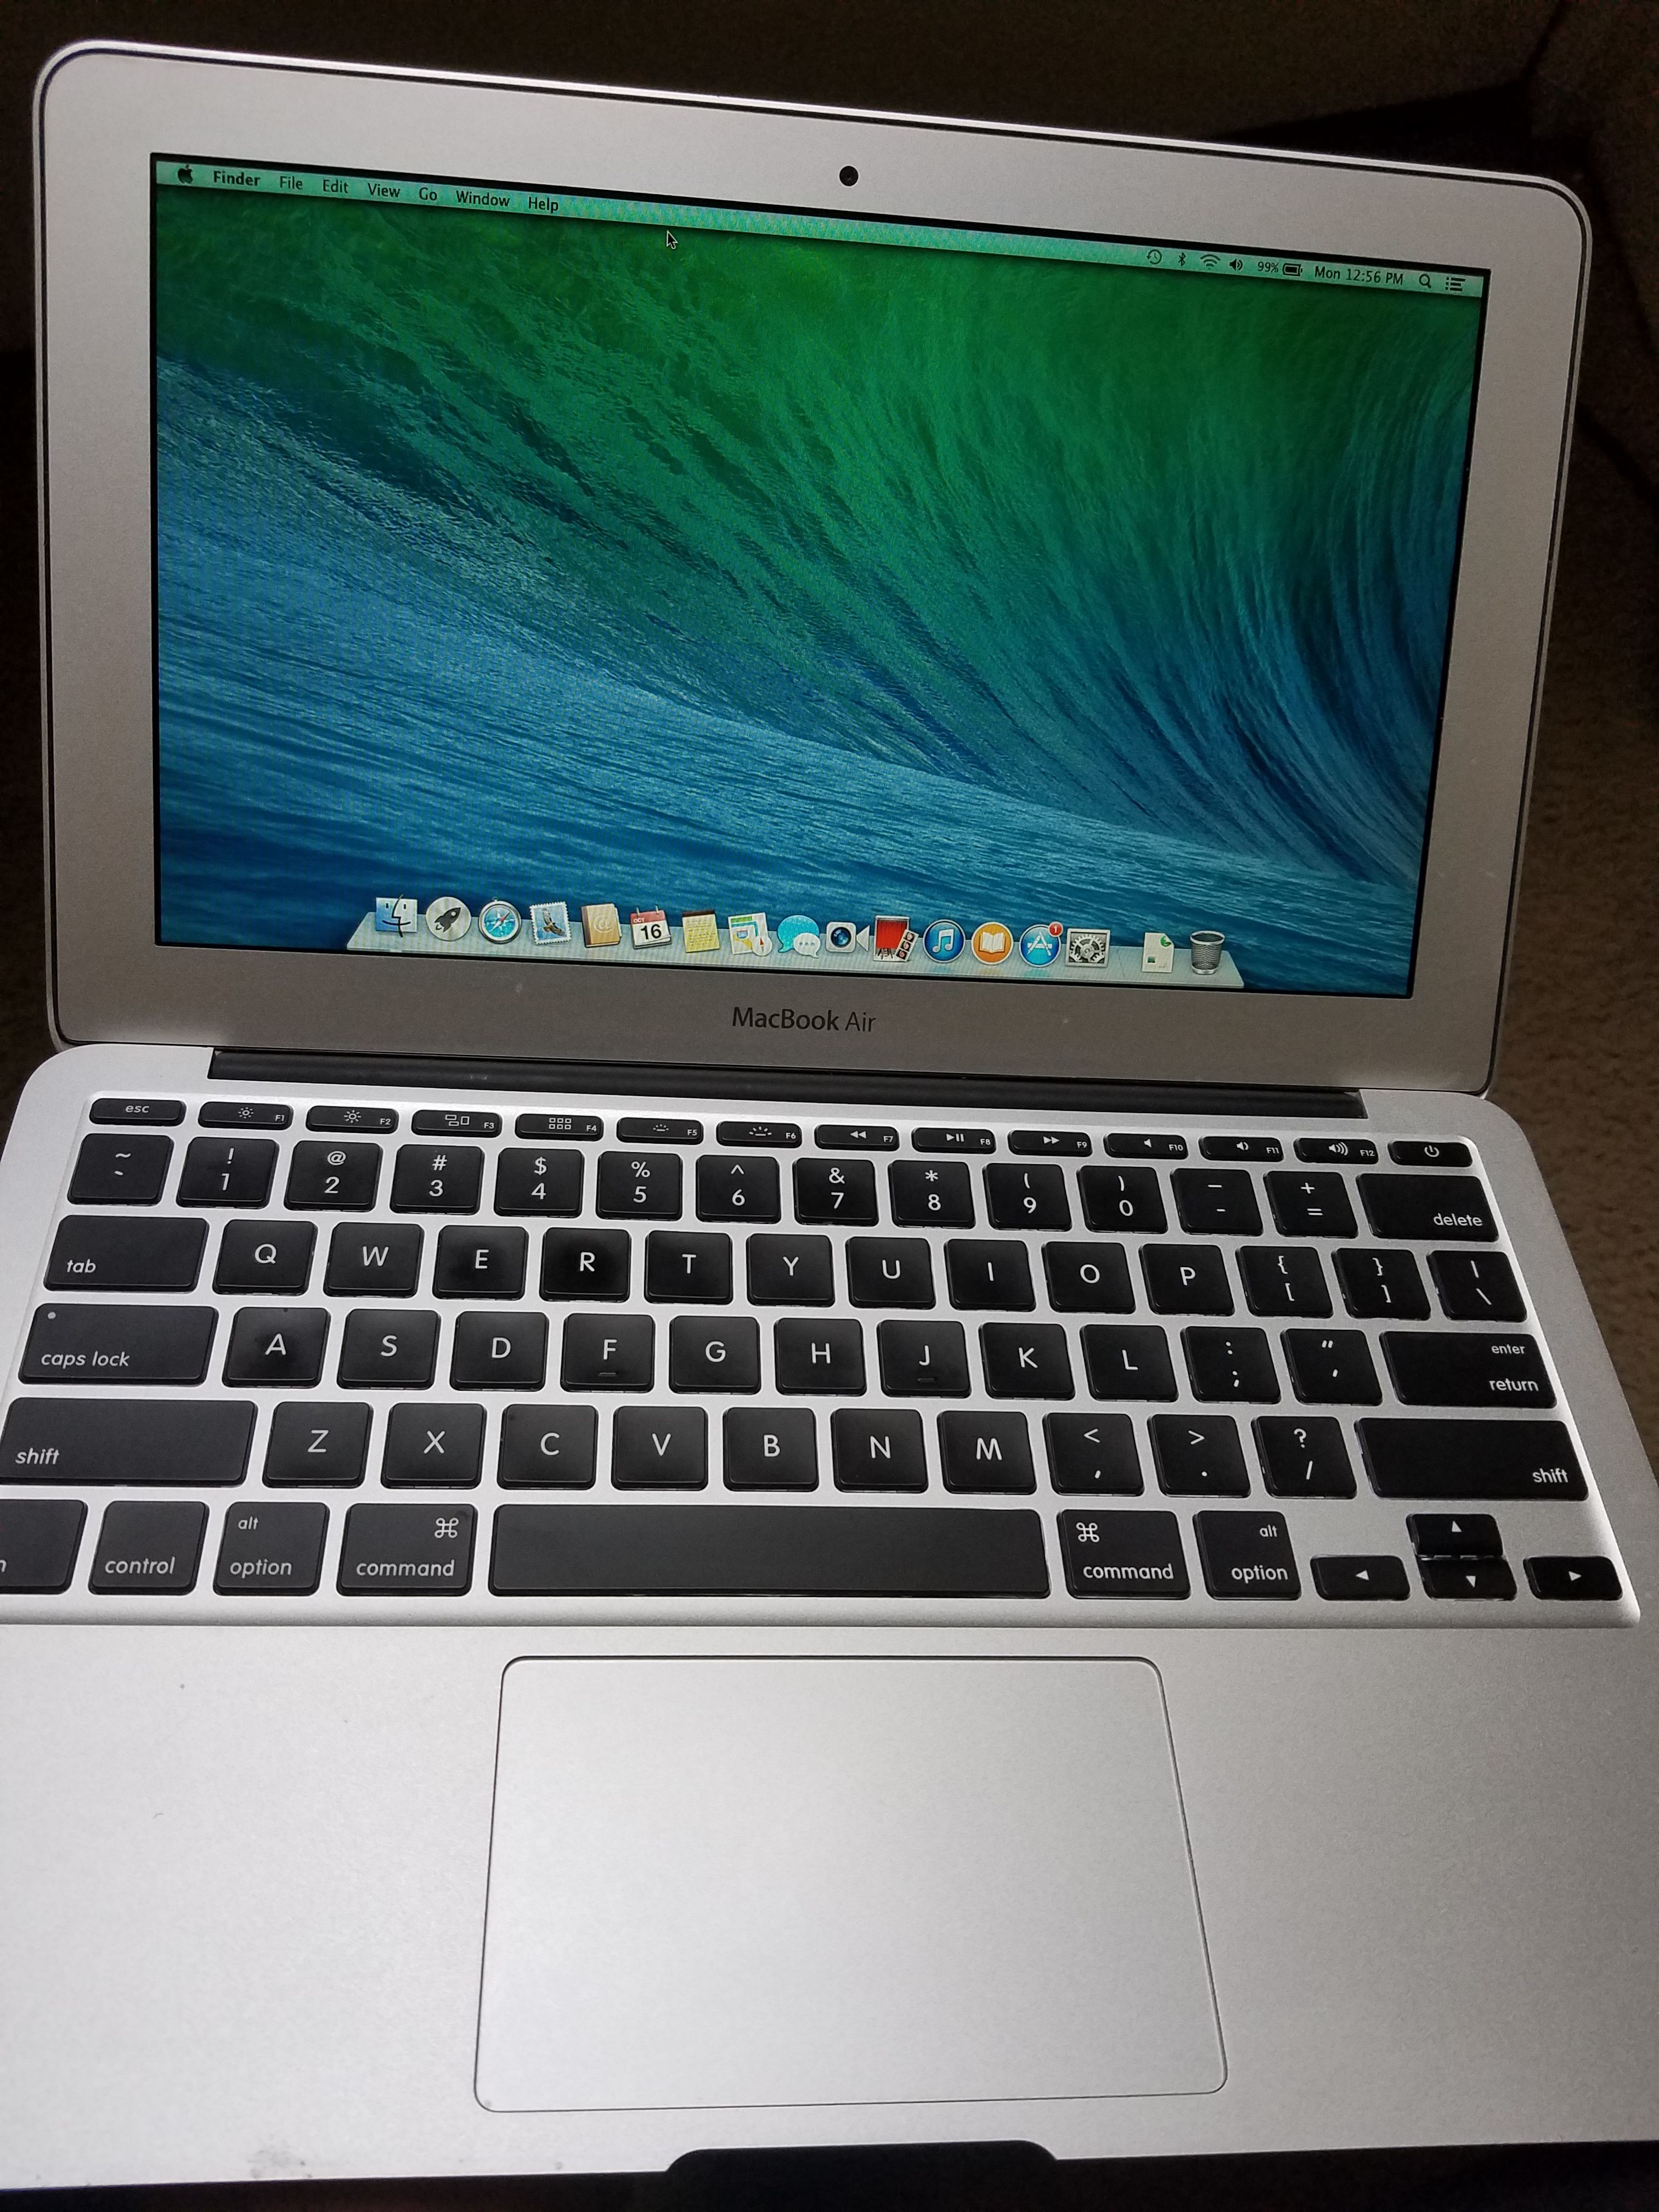 2011 MacBook air "11( 1.6ghz)128gb 4gb ram